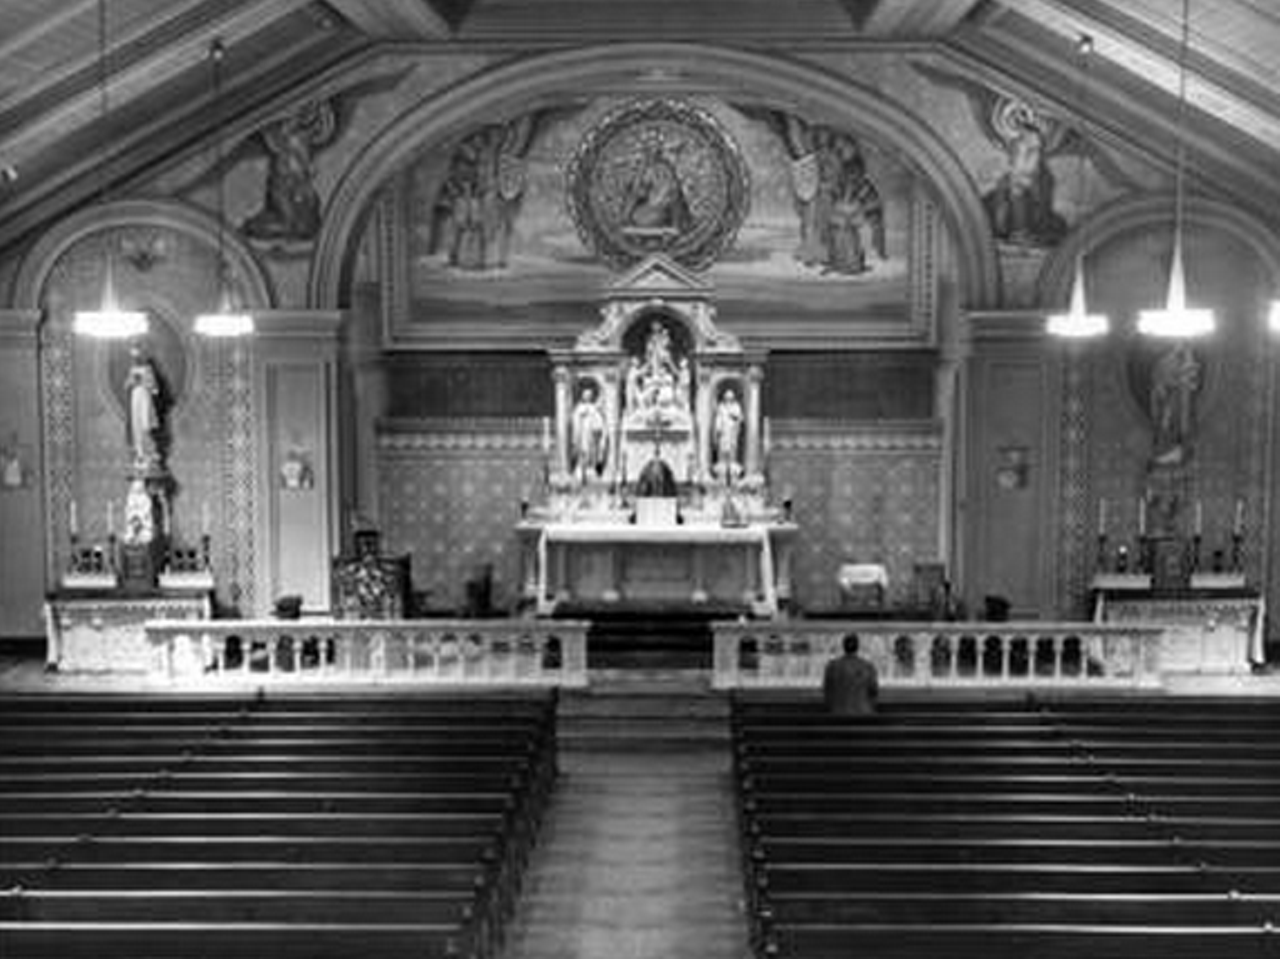 Inside the Holy Rosary Catholic Church, 1961.